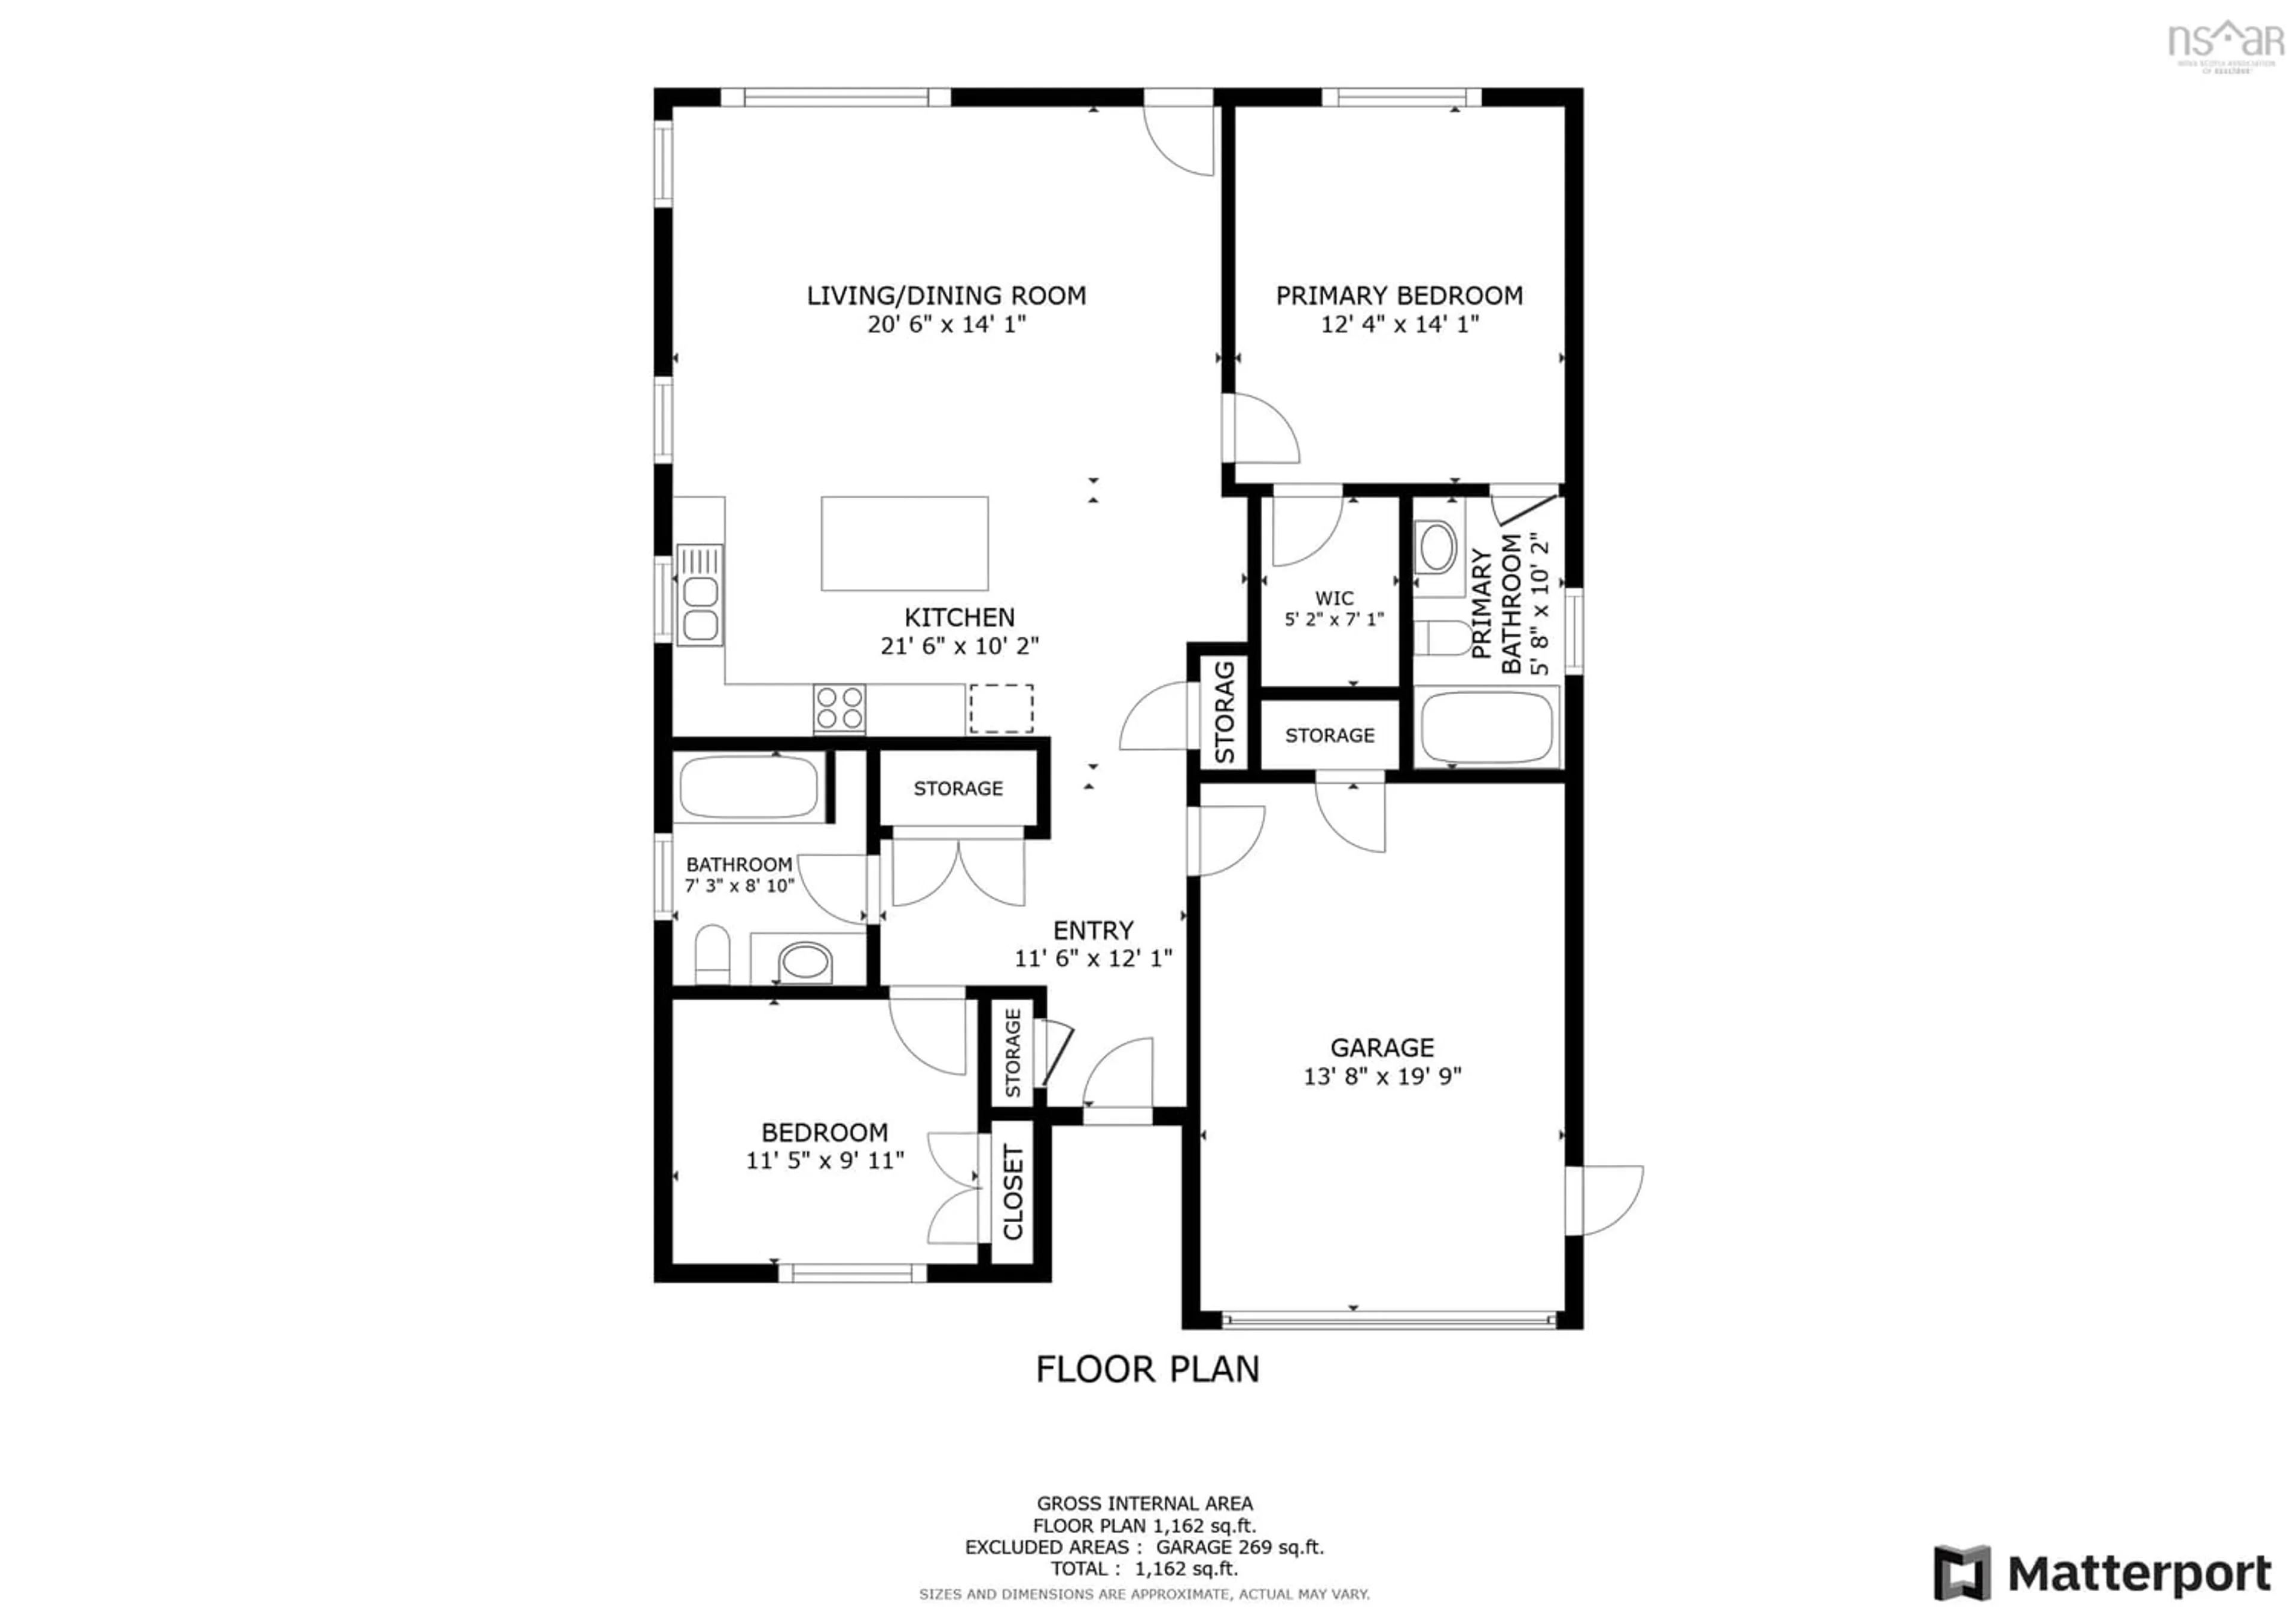 Floor plan for 21 Emma Janes Way, Stewiacke Nova Scotia B0N 2J0